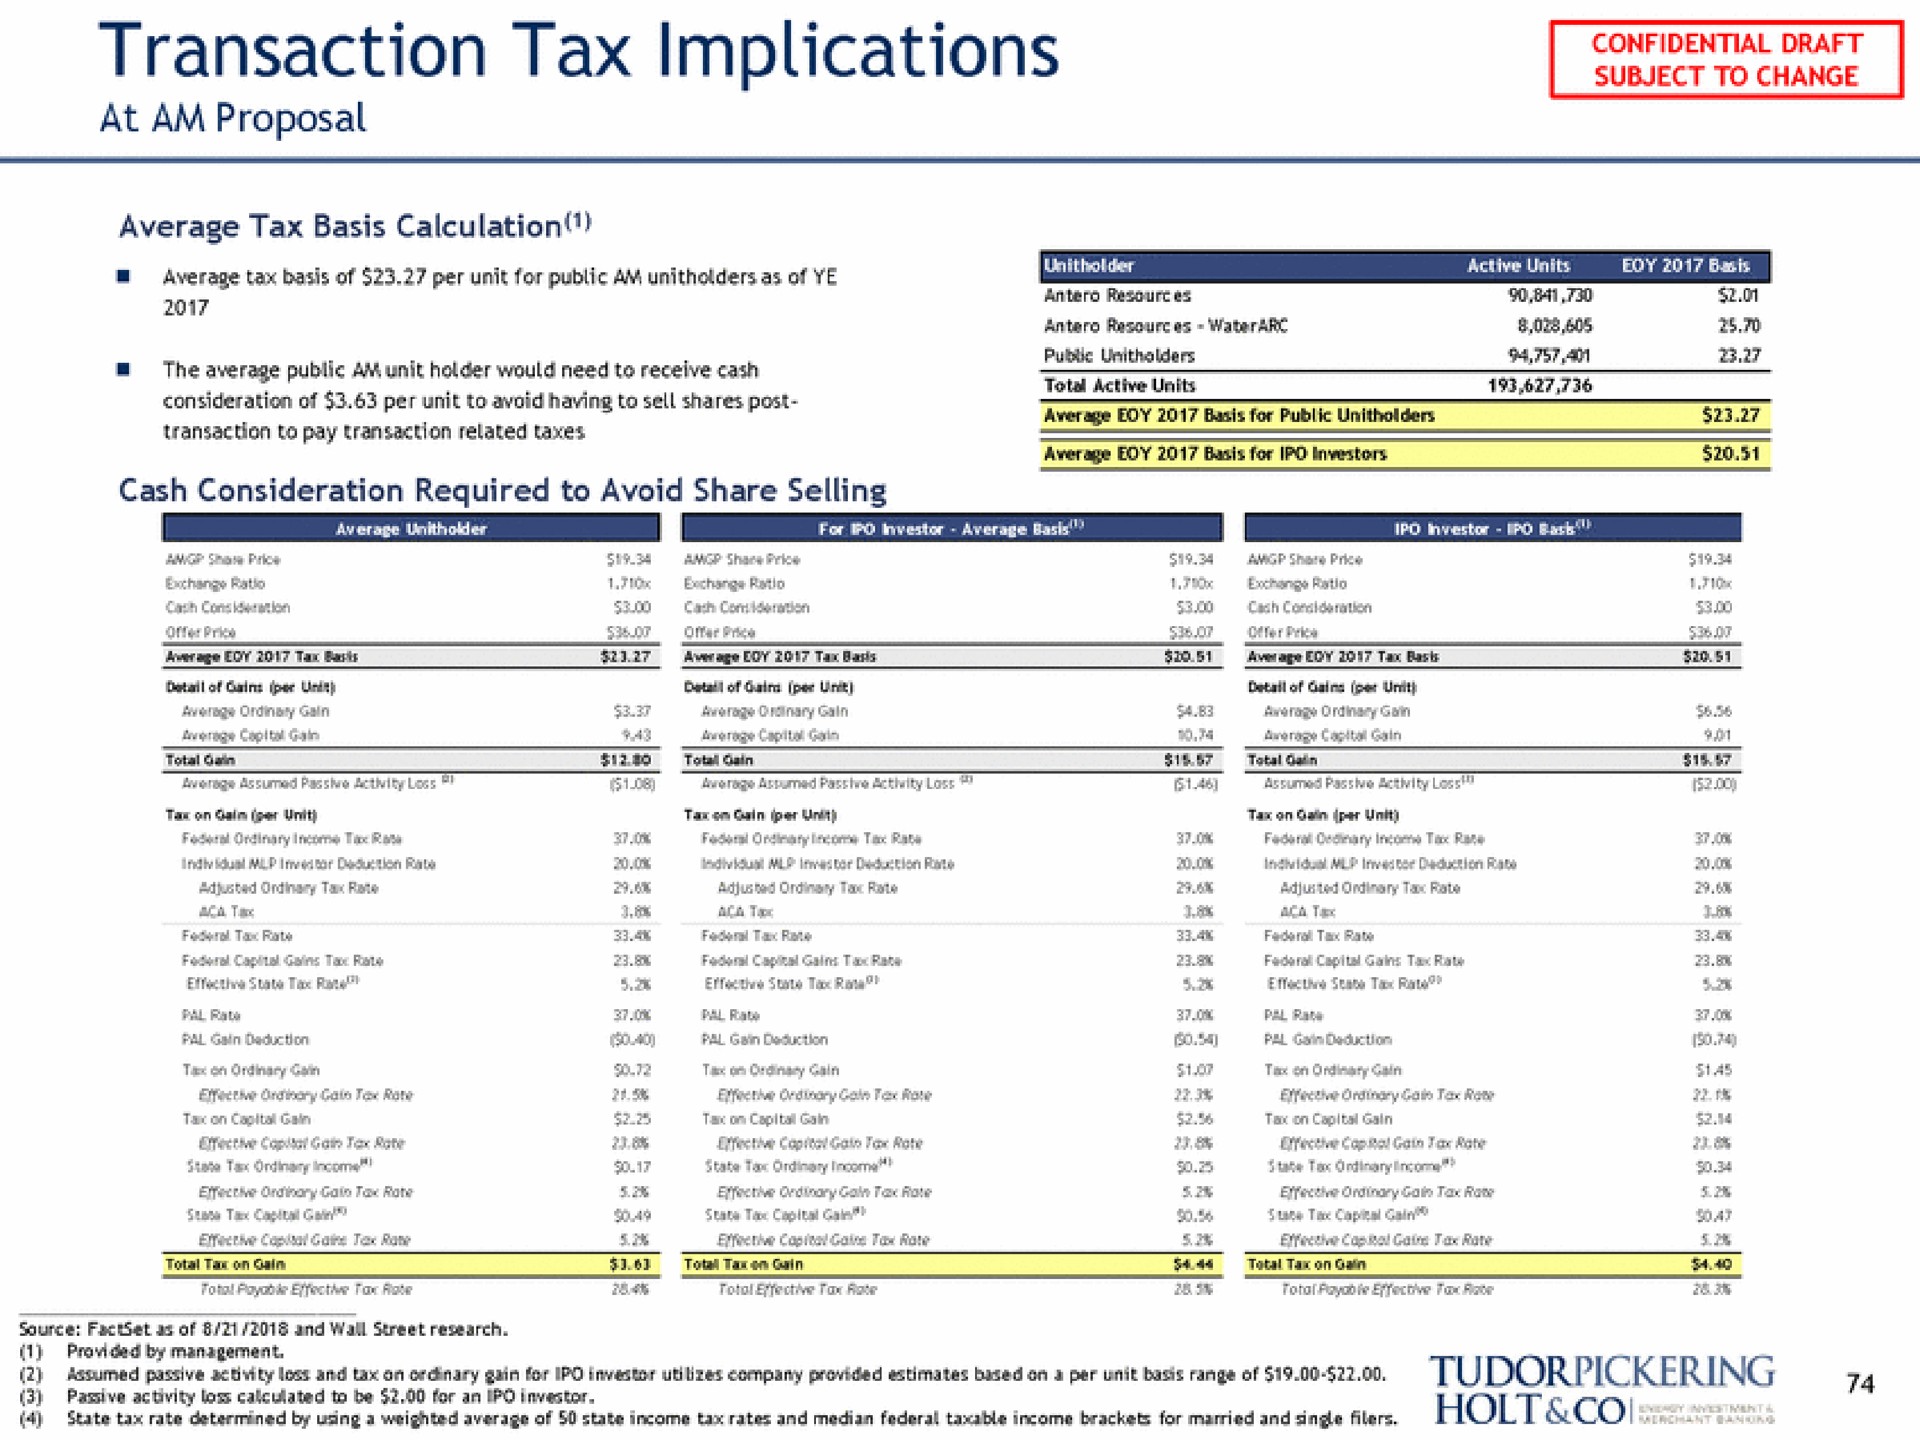 transaction tax implications holt col ess | Tudor, Pickering, Holt & Co